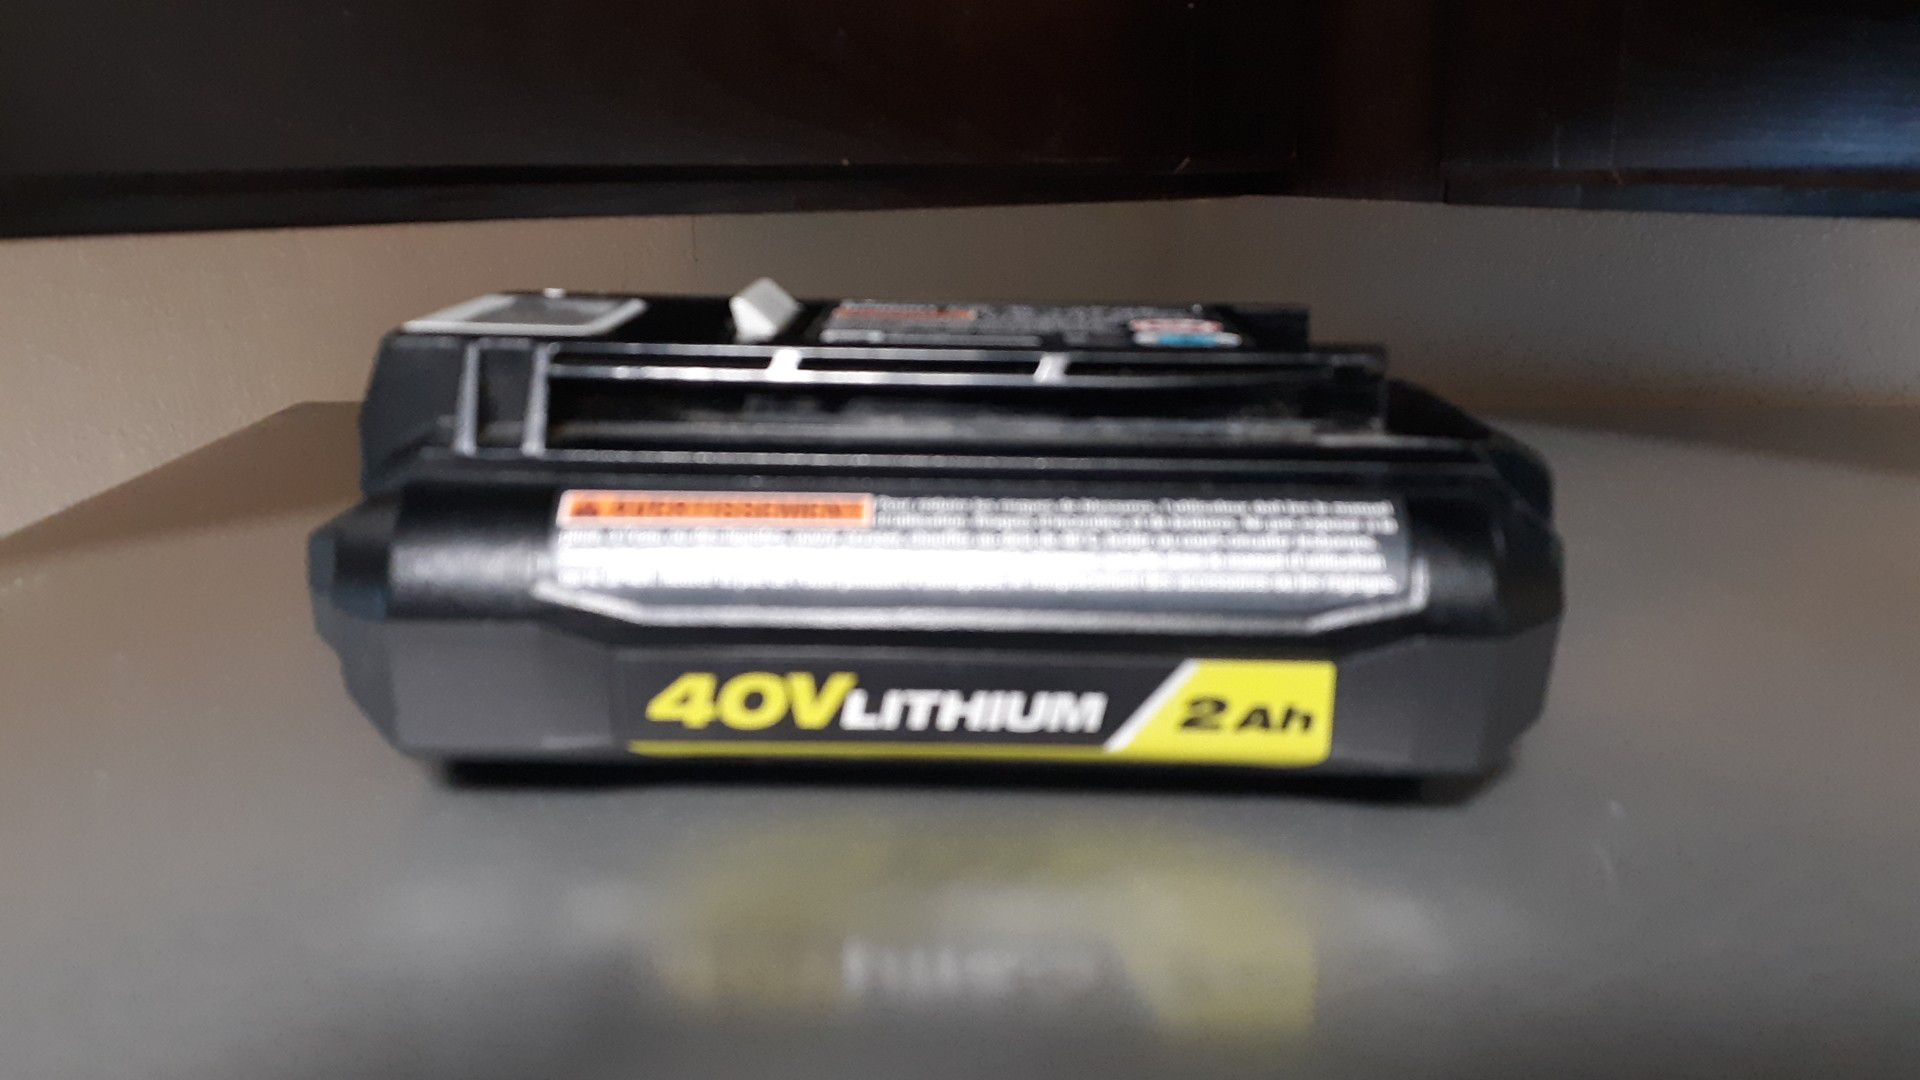 Ryobi 40 volt lithium battery pack